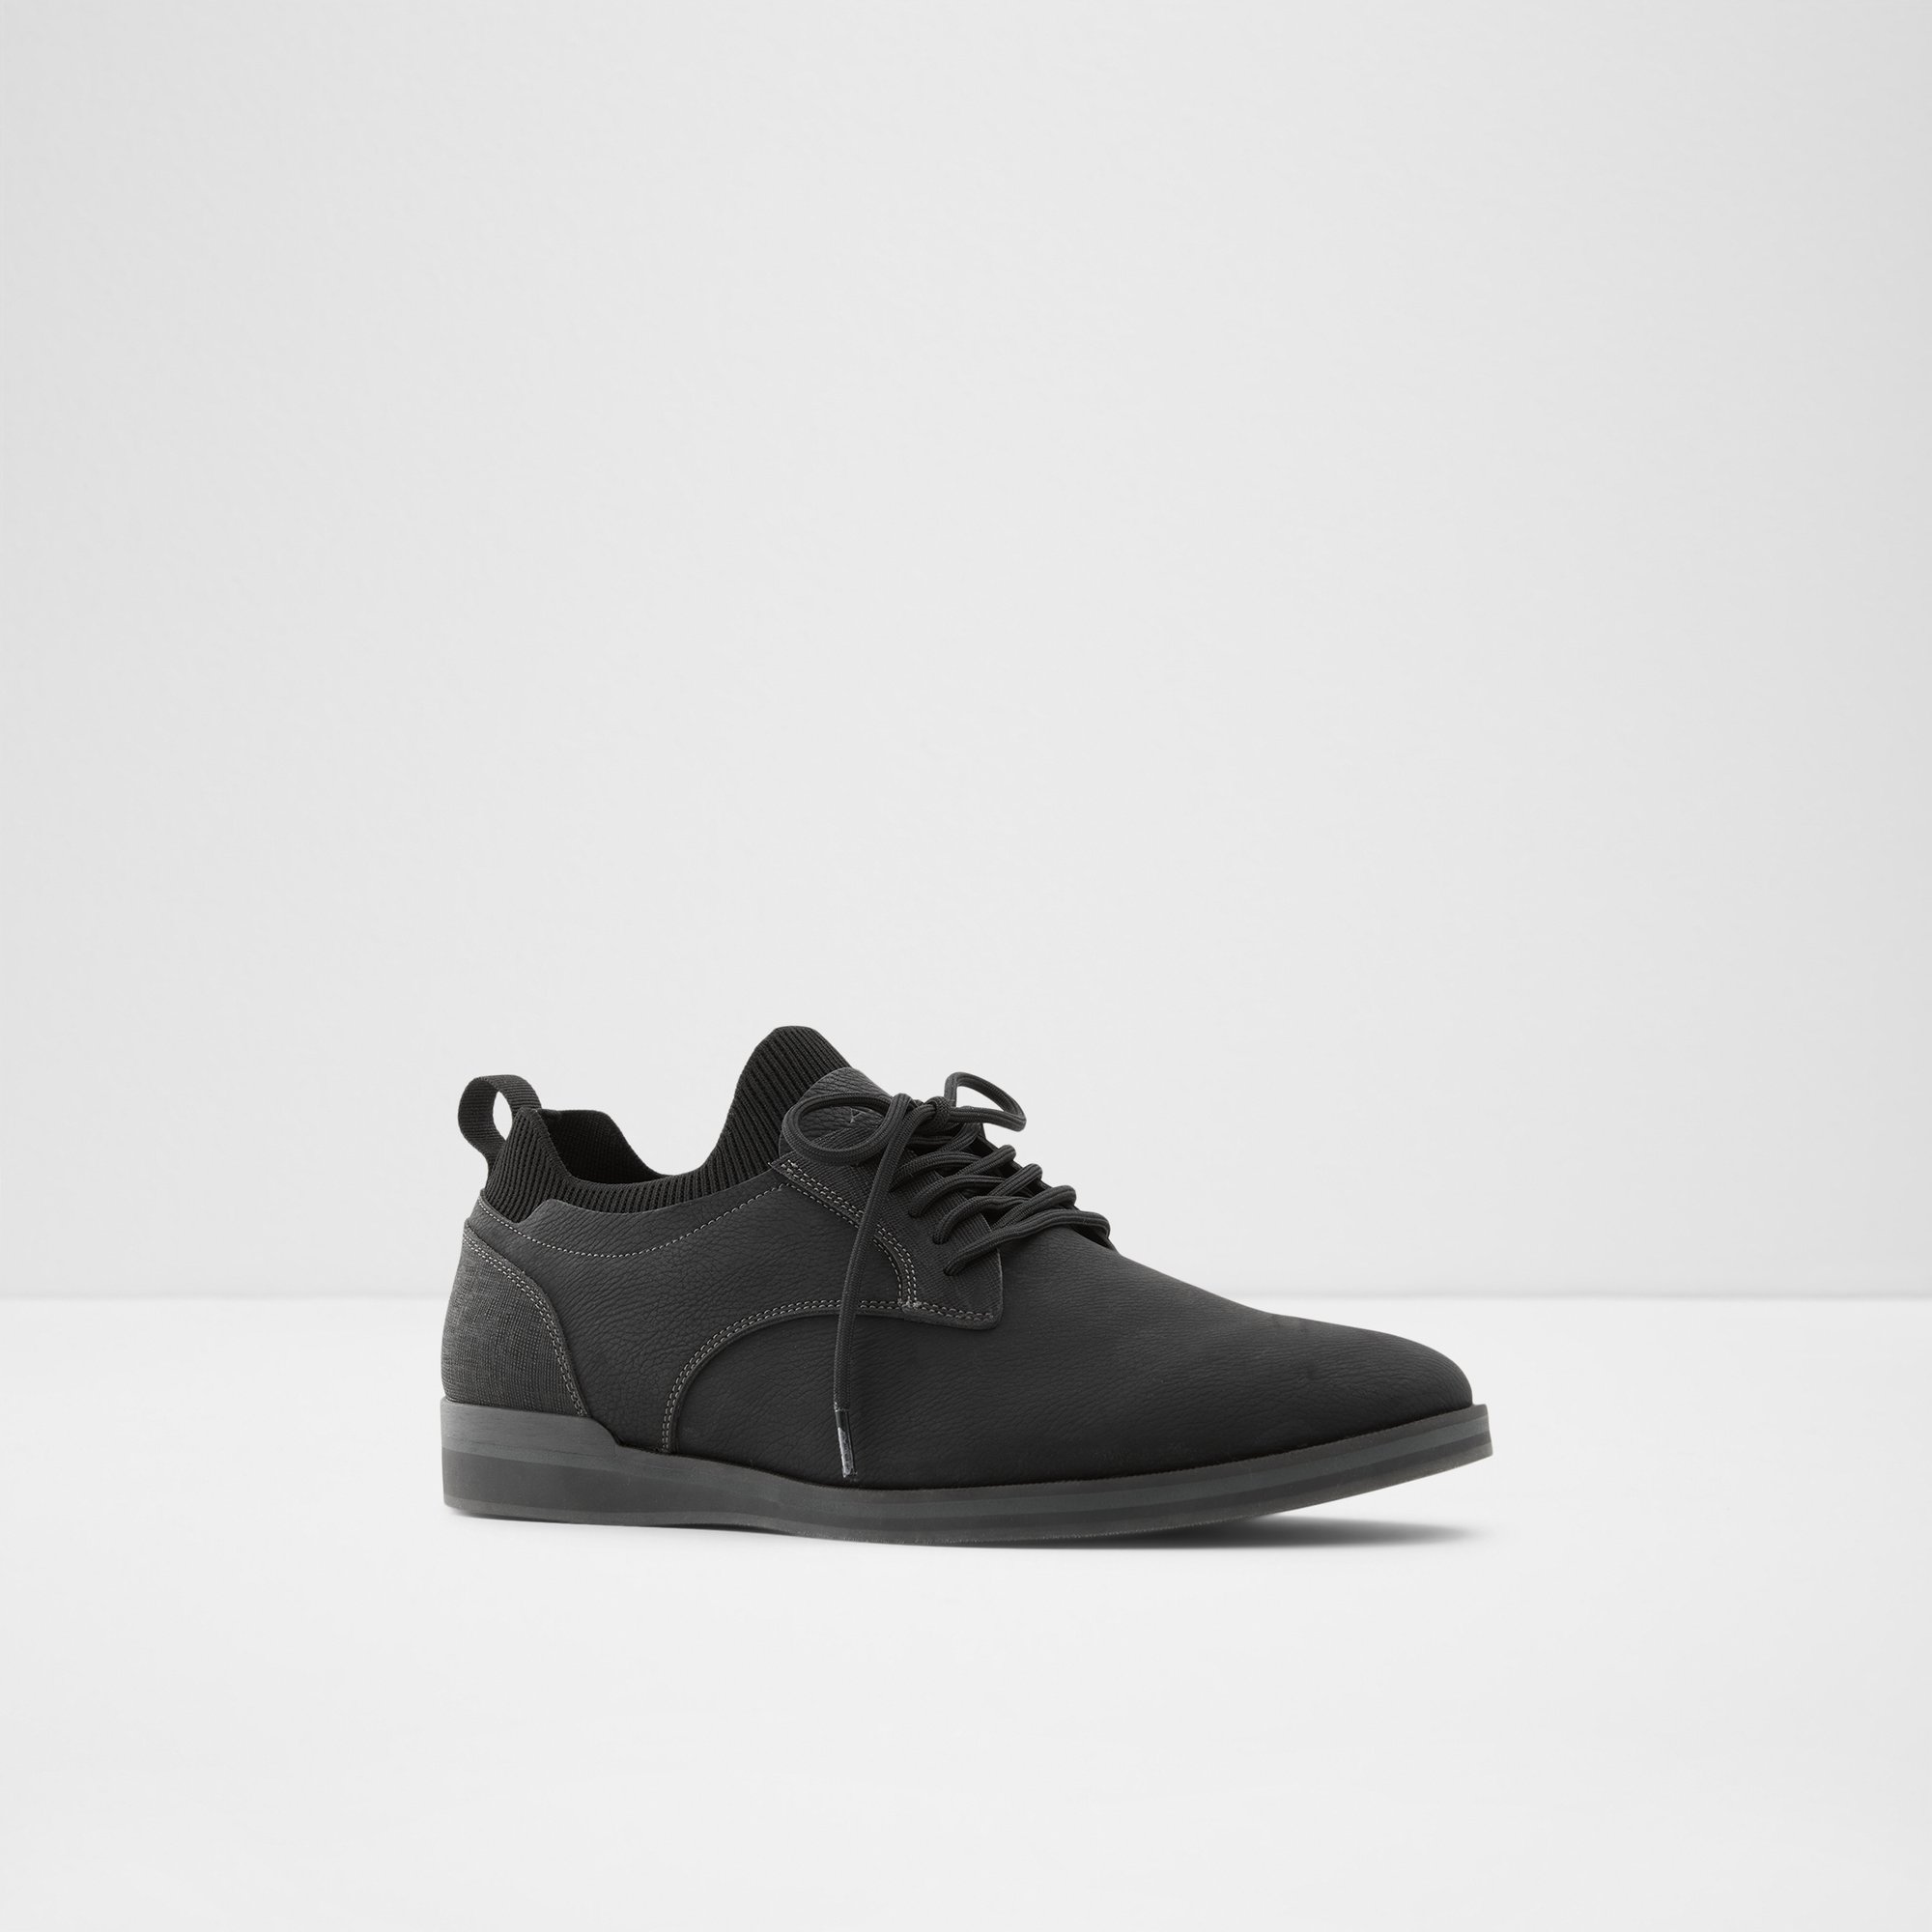 Gladosen Black Synthetic Smooth Men S Casual Shoes Aldo Us